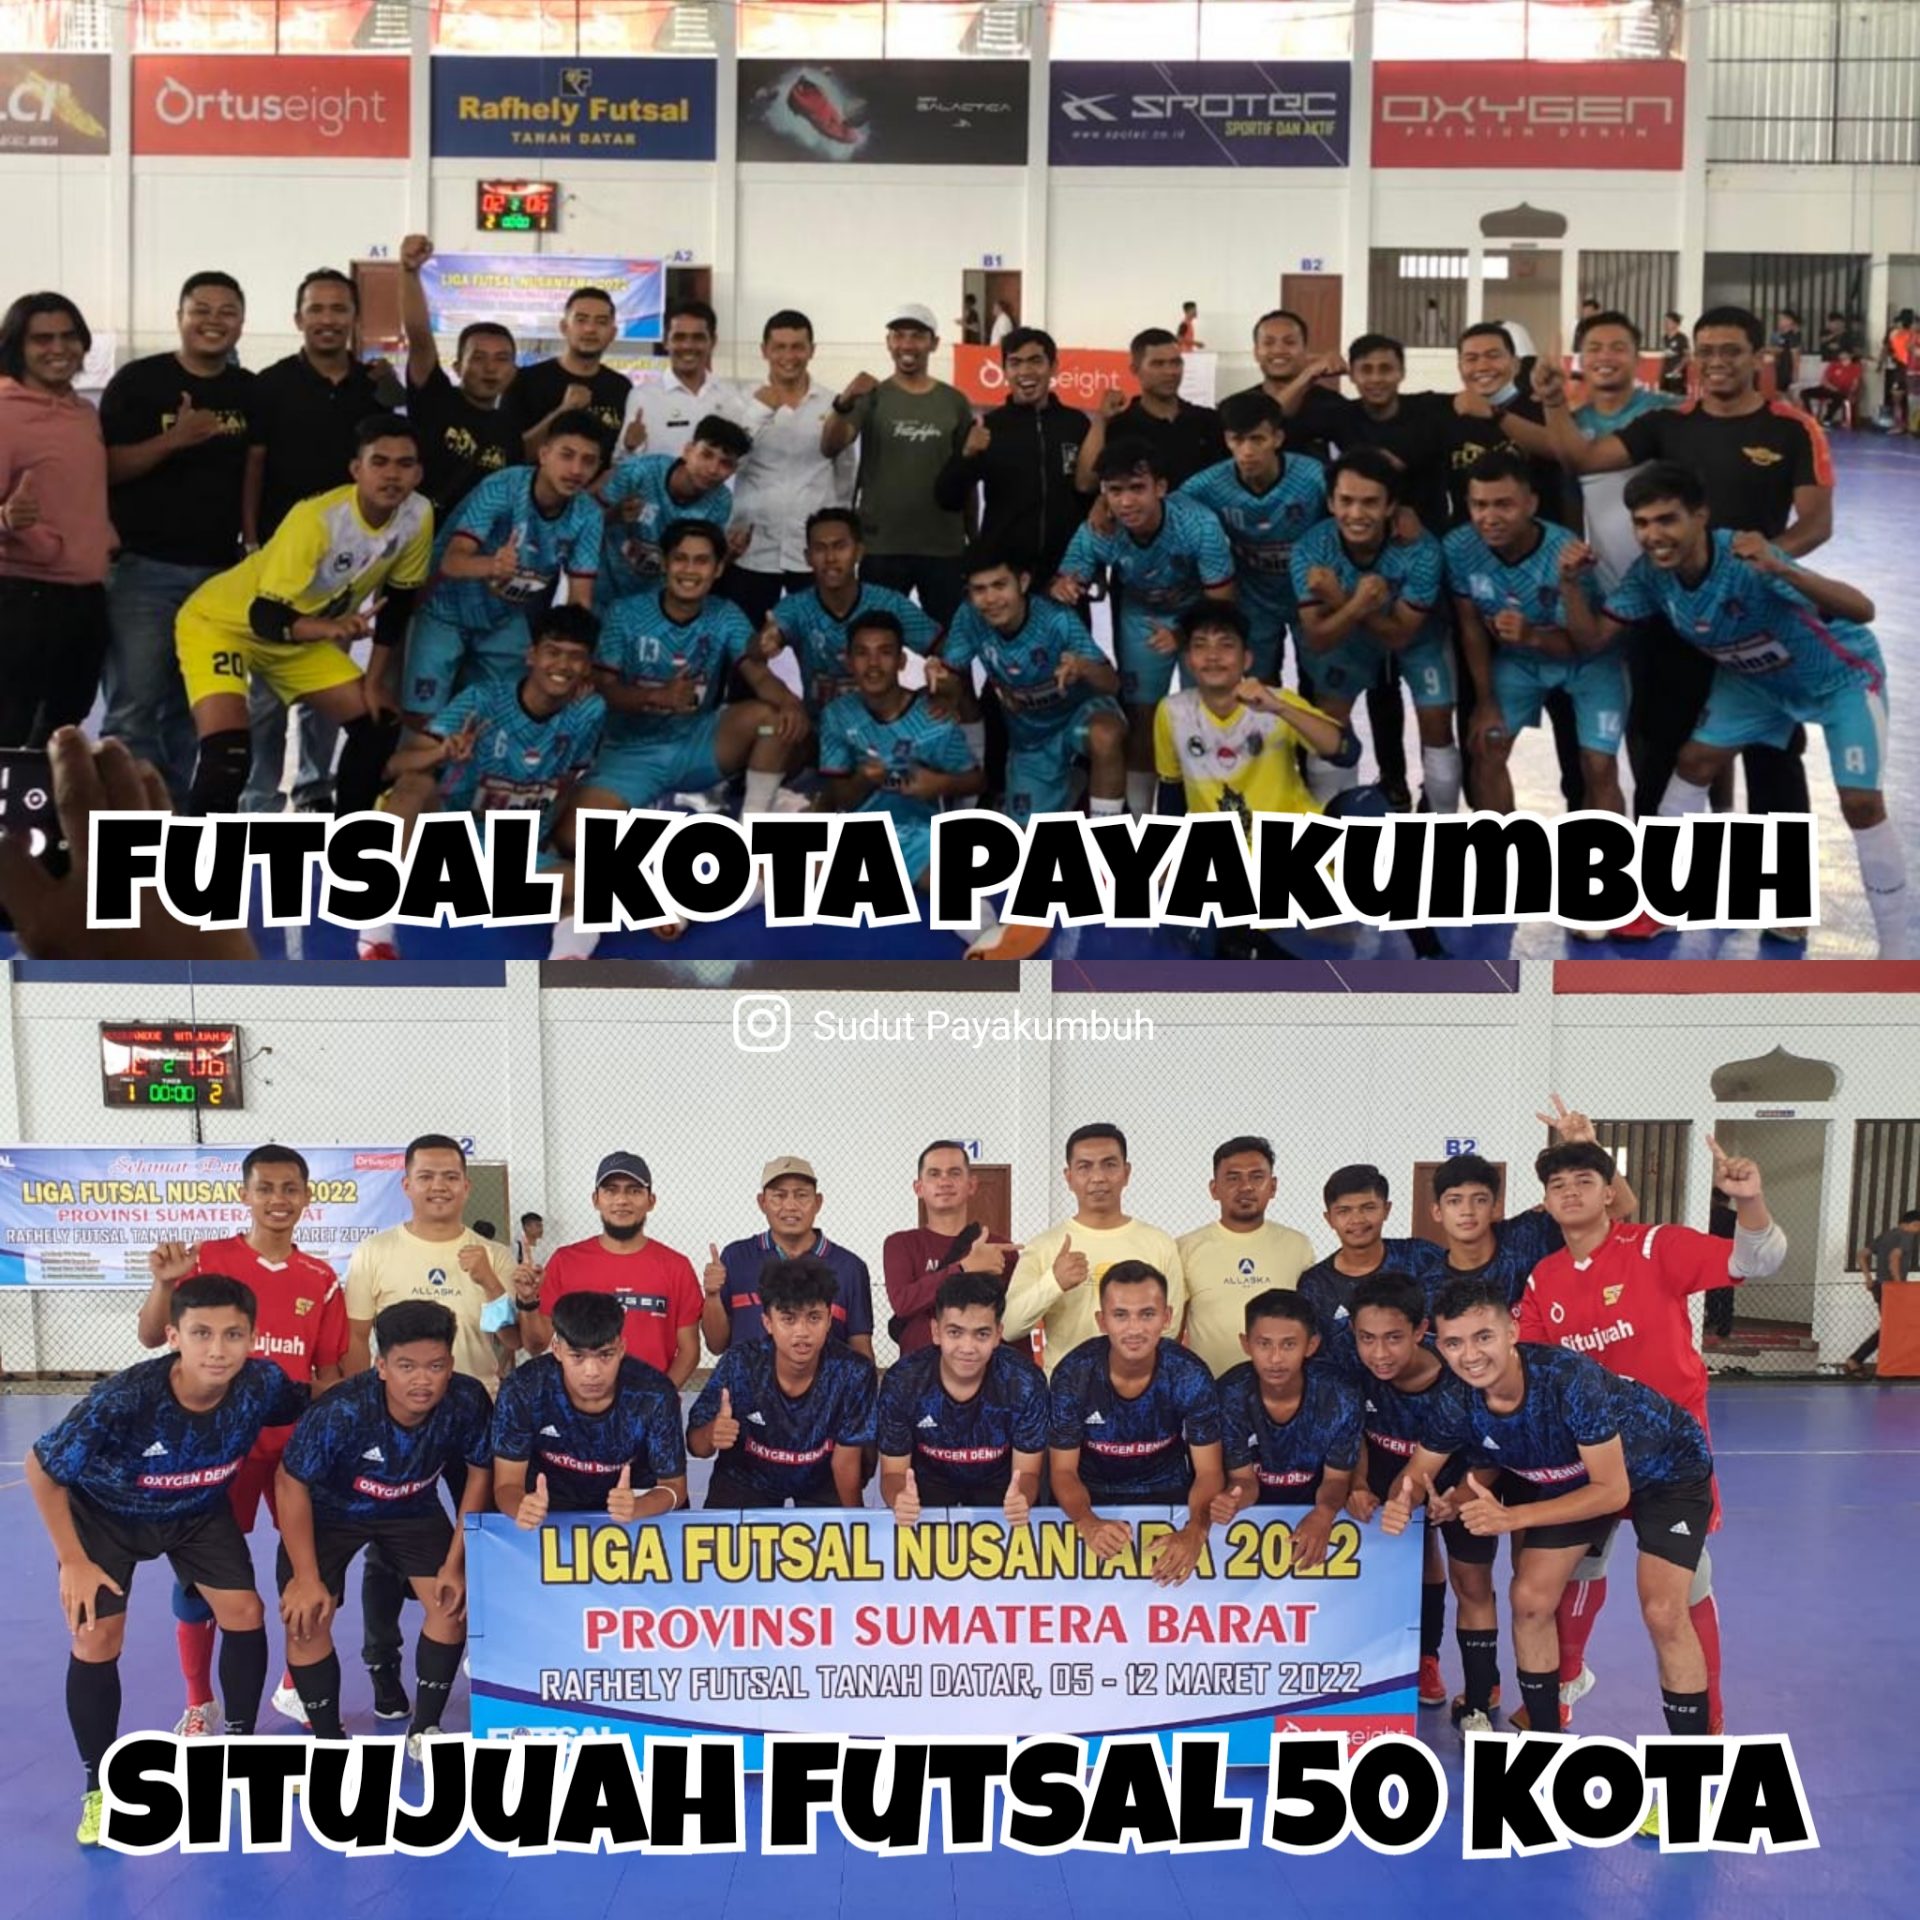 Tumbangkan Futsal Pasaman dan Tamar Kota Pariaman, Duo Tim Luak Limo Puluah Melaju ke Semifinal LFN 2022